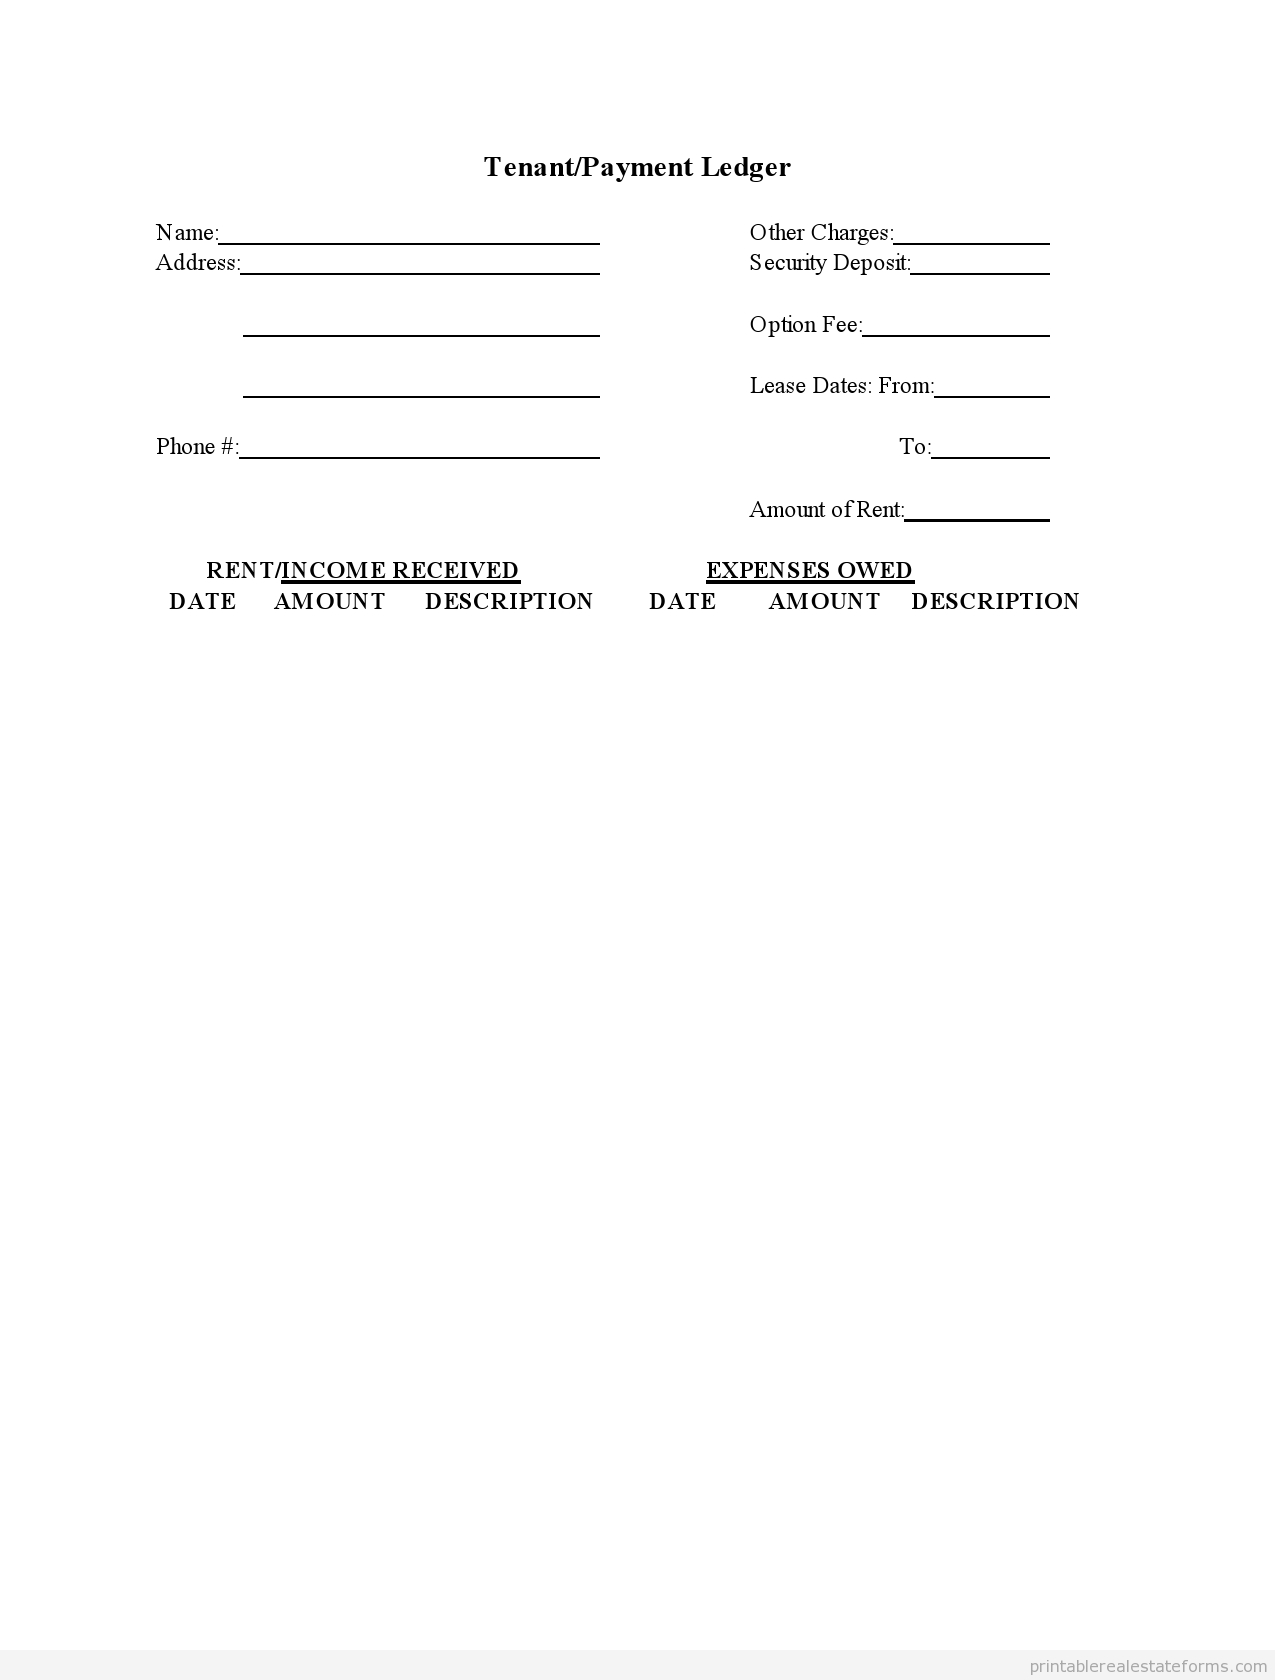 Free Printable Rental Ledger Template Form (Sample Pdf) - Free Printable Rent Ledger